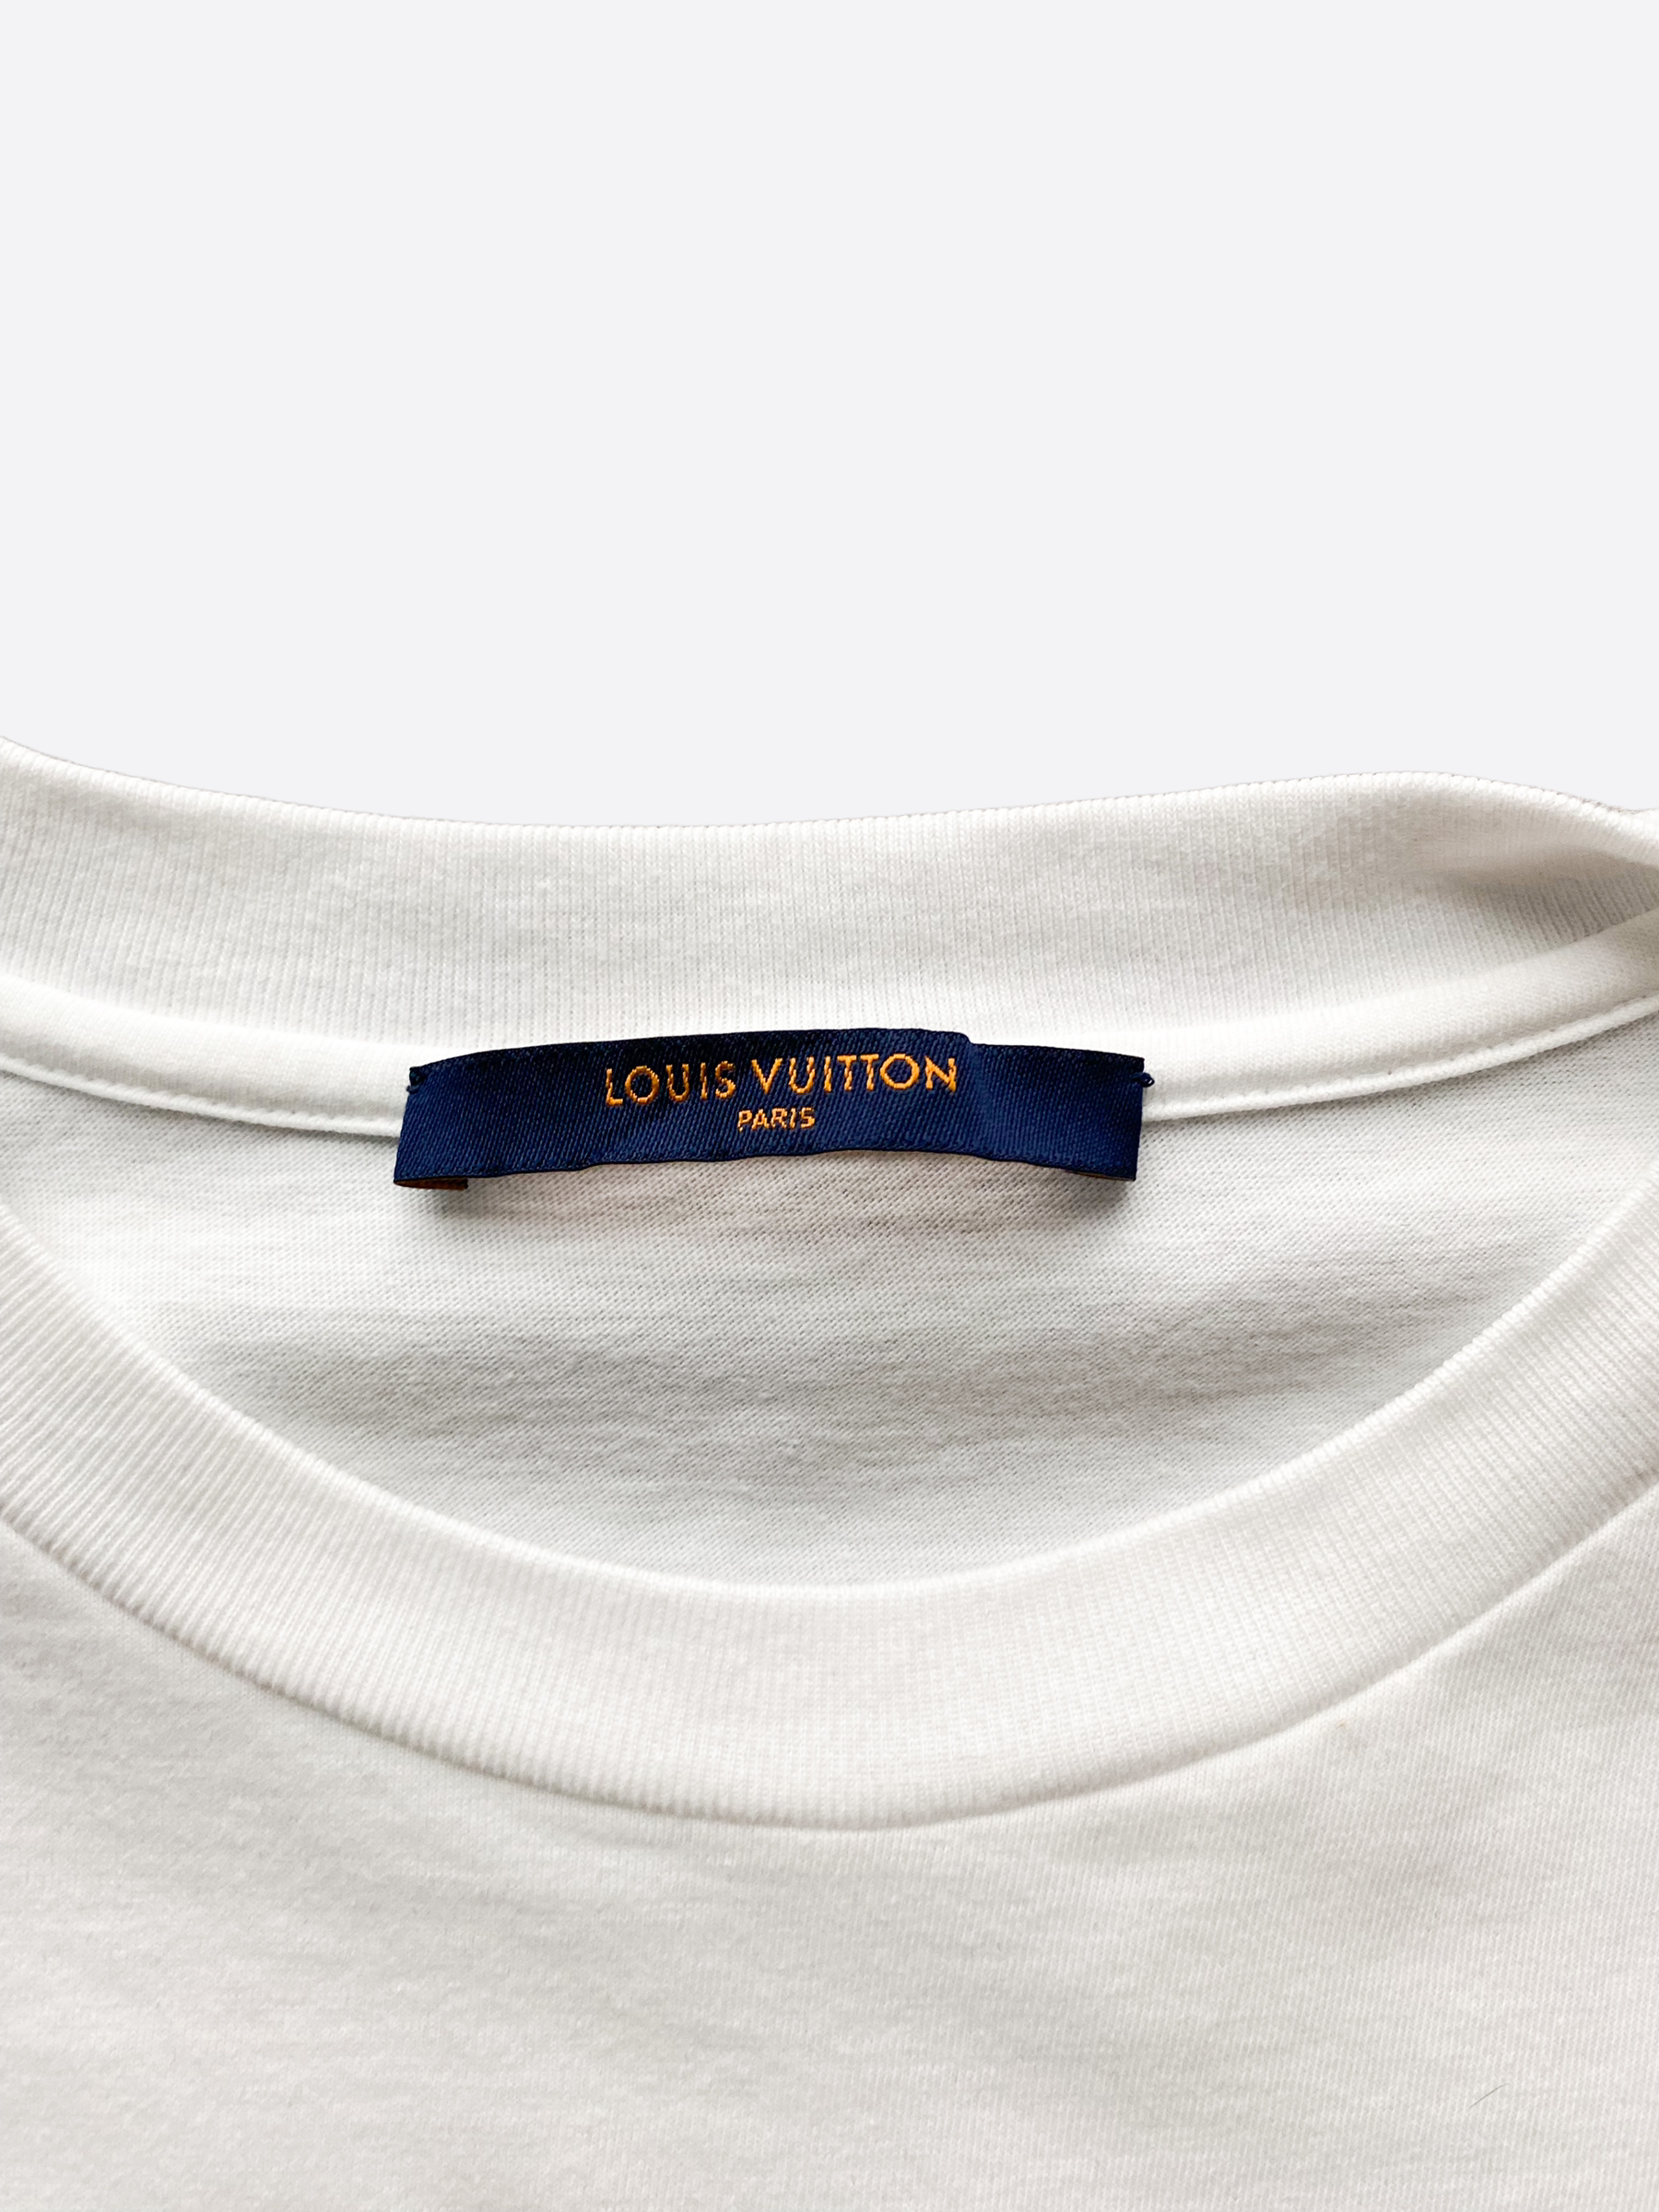 Louis Vuitton Kansas Winds printed t-shirt for Sale in West Orange